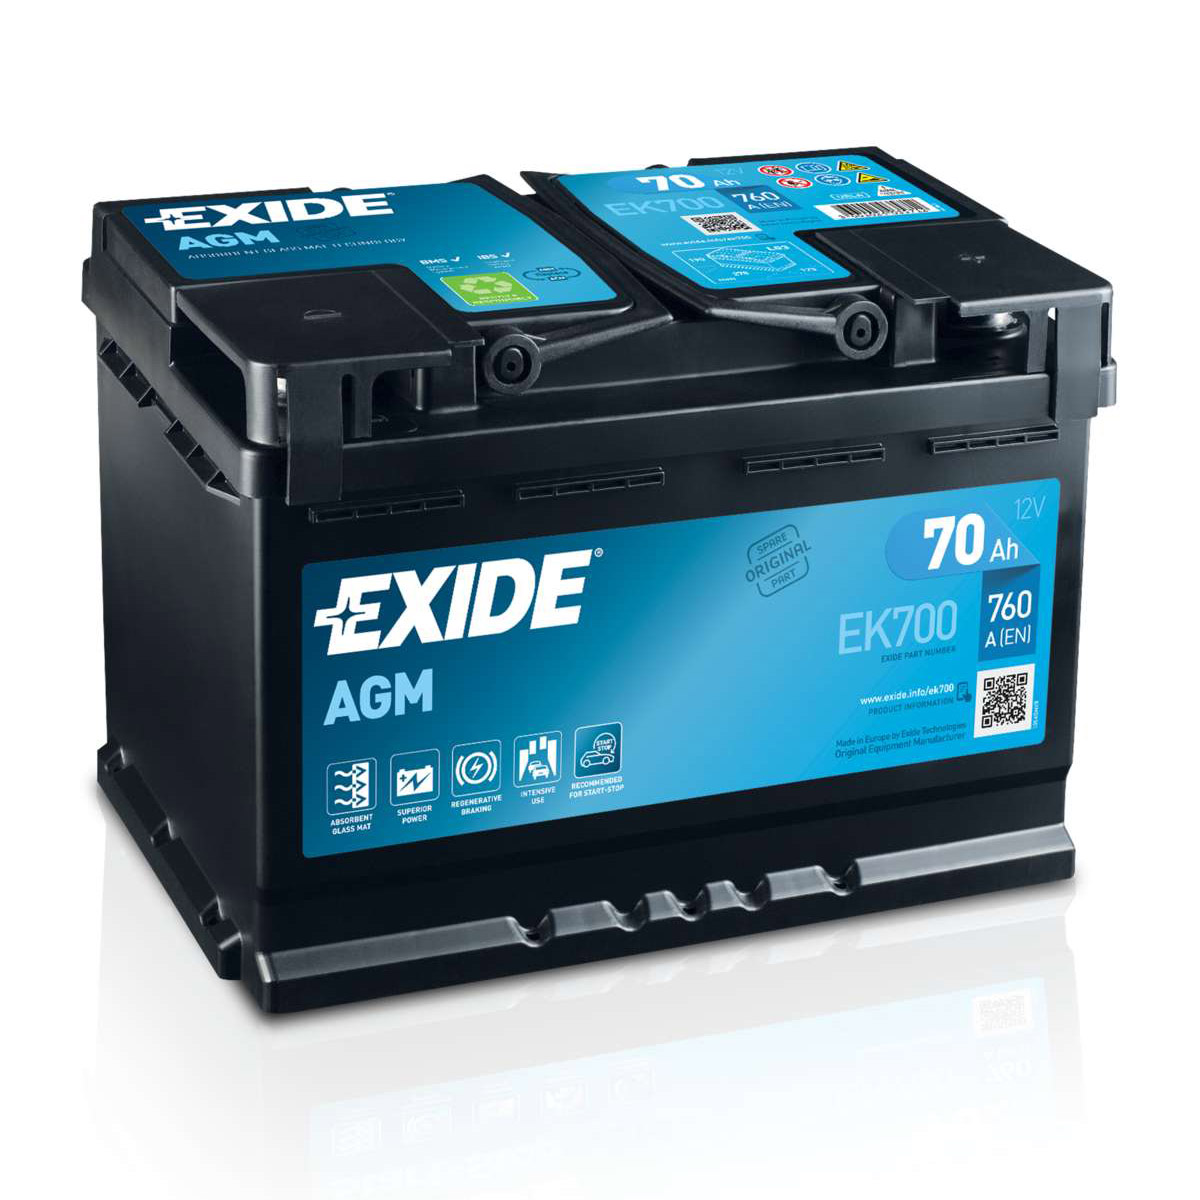 Exide EK700 AGM 70Ah 760A Autobatterie Start-Stop